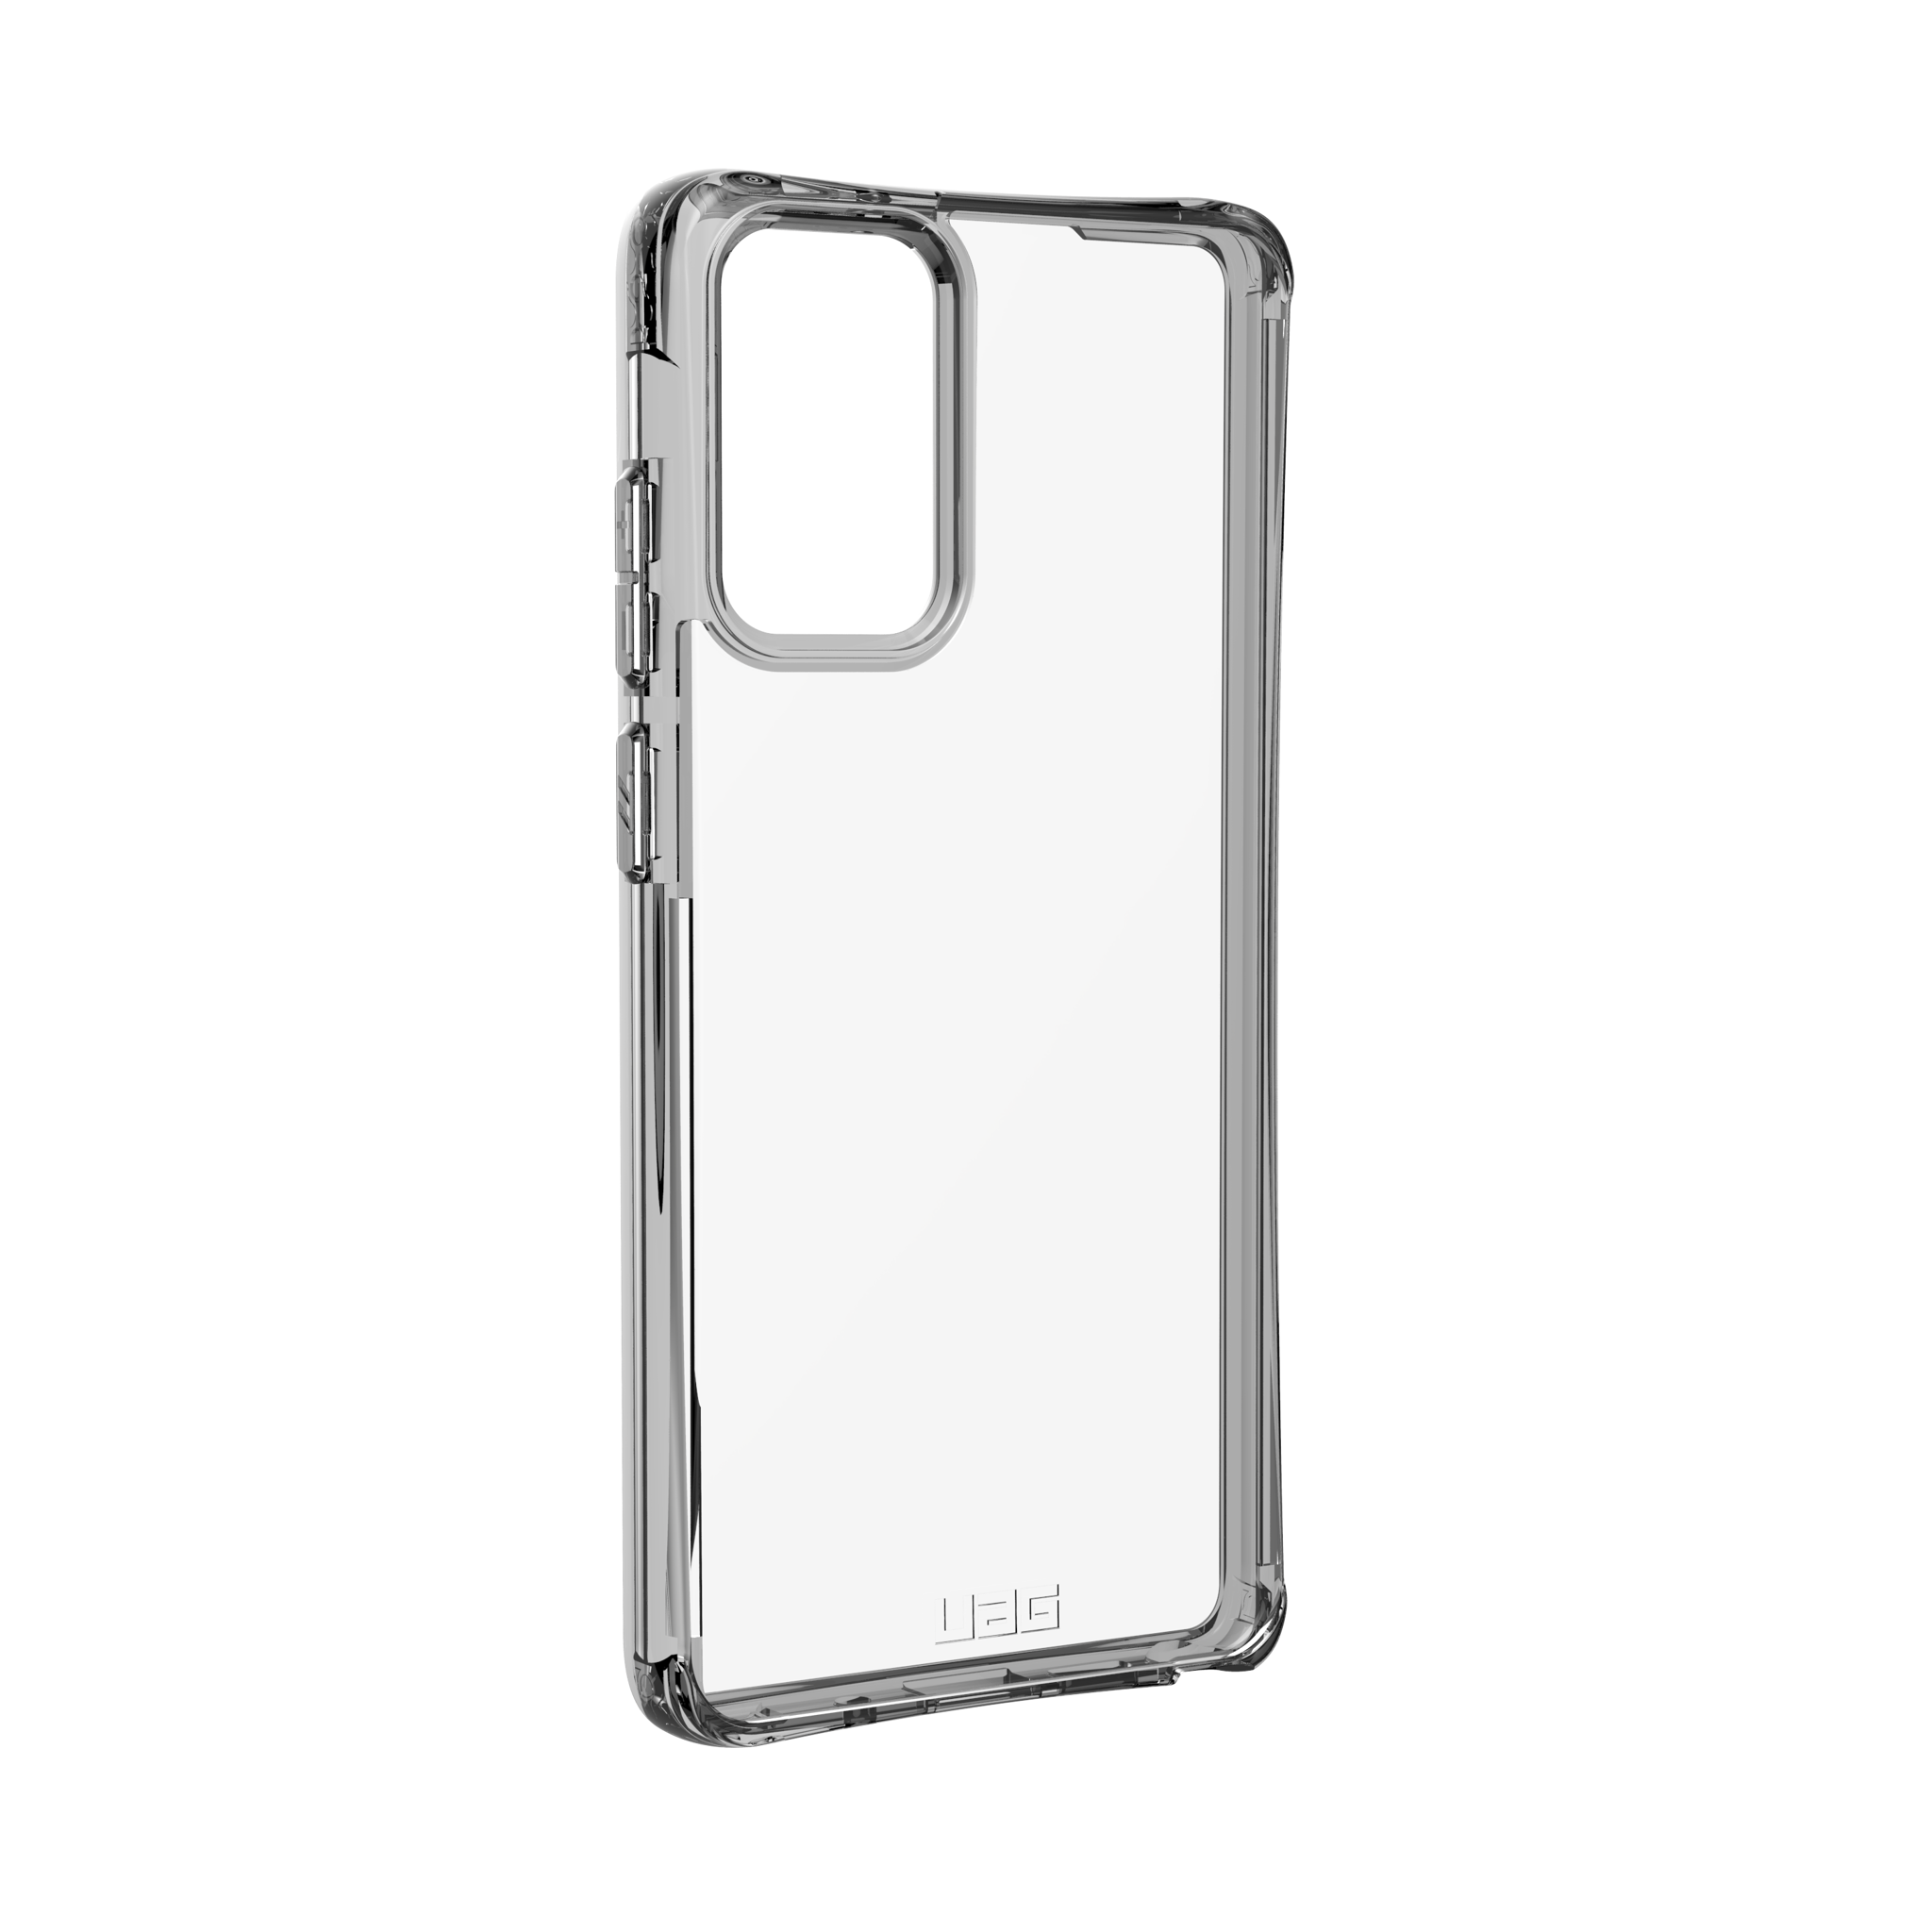  Ốp lưng Plyo cho Samsung Galaxy Note 20 [6.7-inch] 